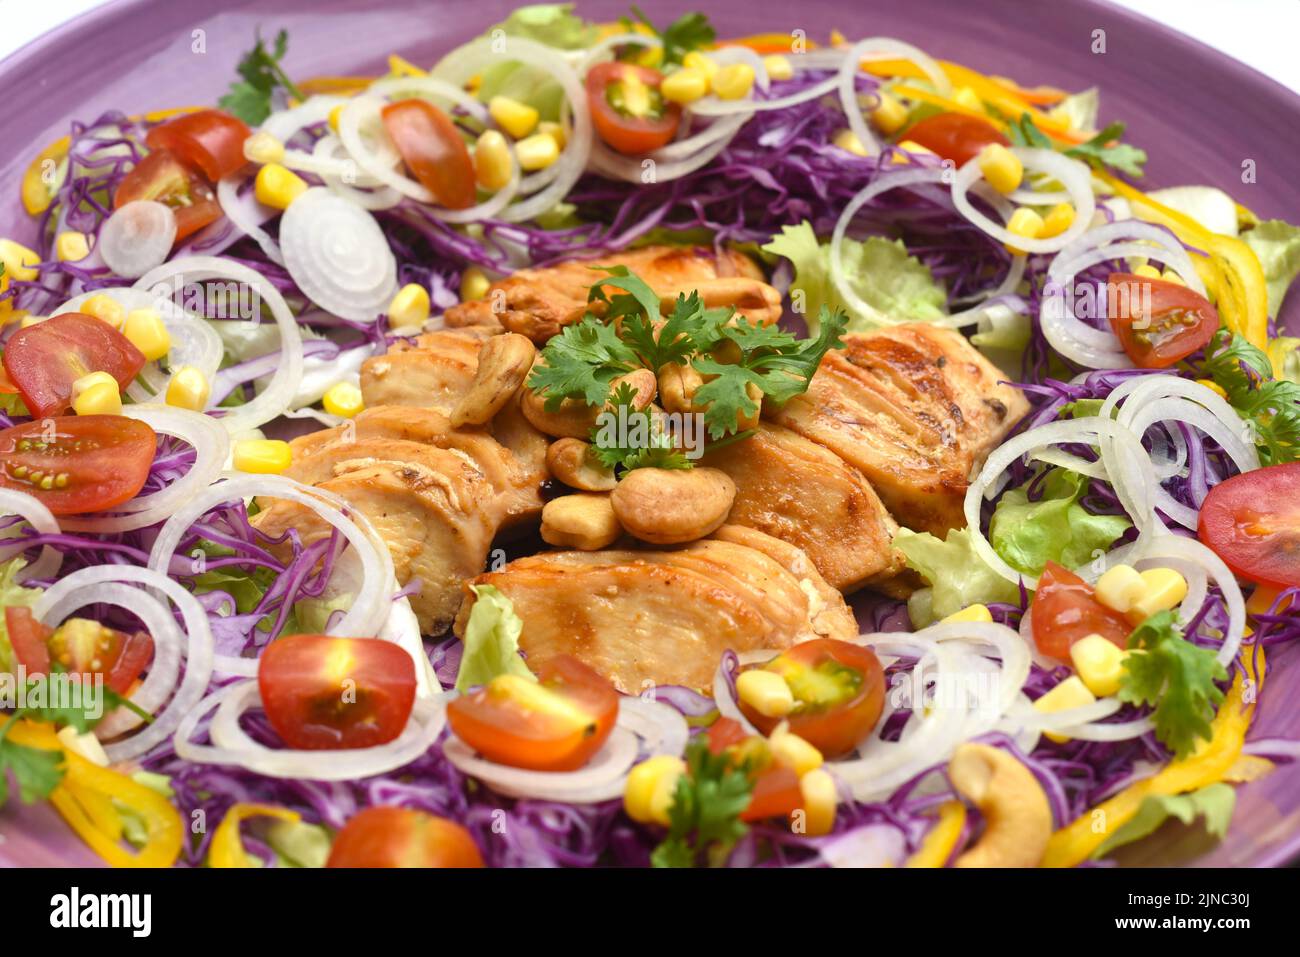 Pan pollo frito con verduras y primer plano en plato púrpura Foto de stock